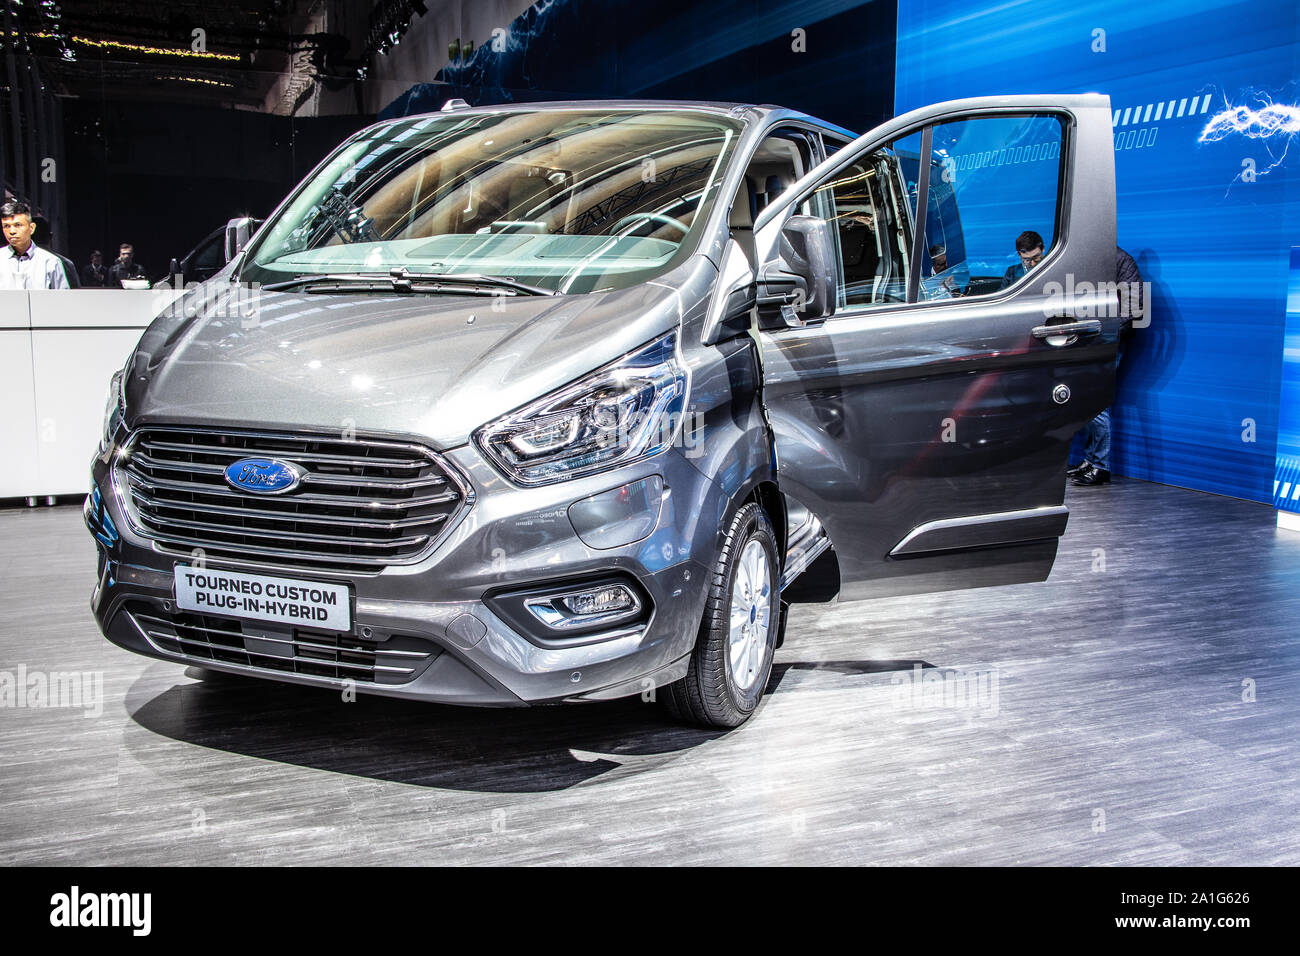 Ford Transit Custom Facelift (2017): Mit Plug-in-Hybrid und Sport